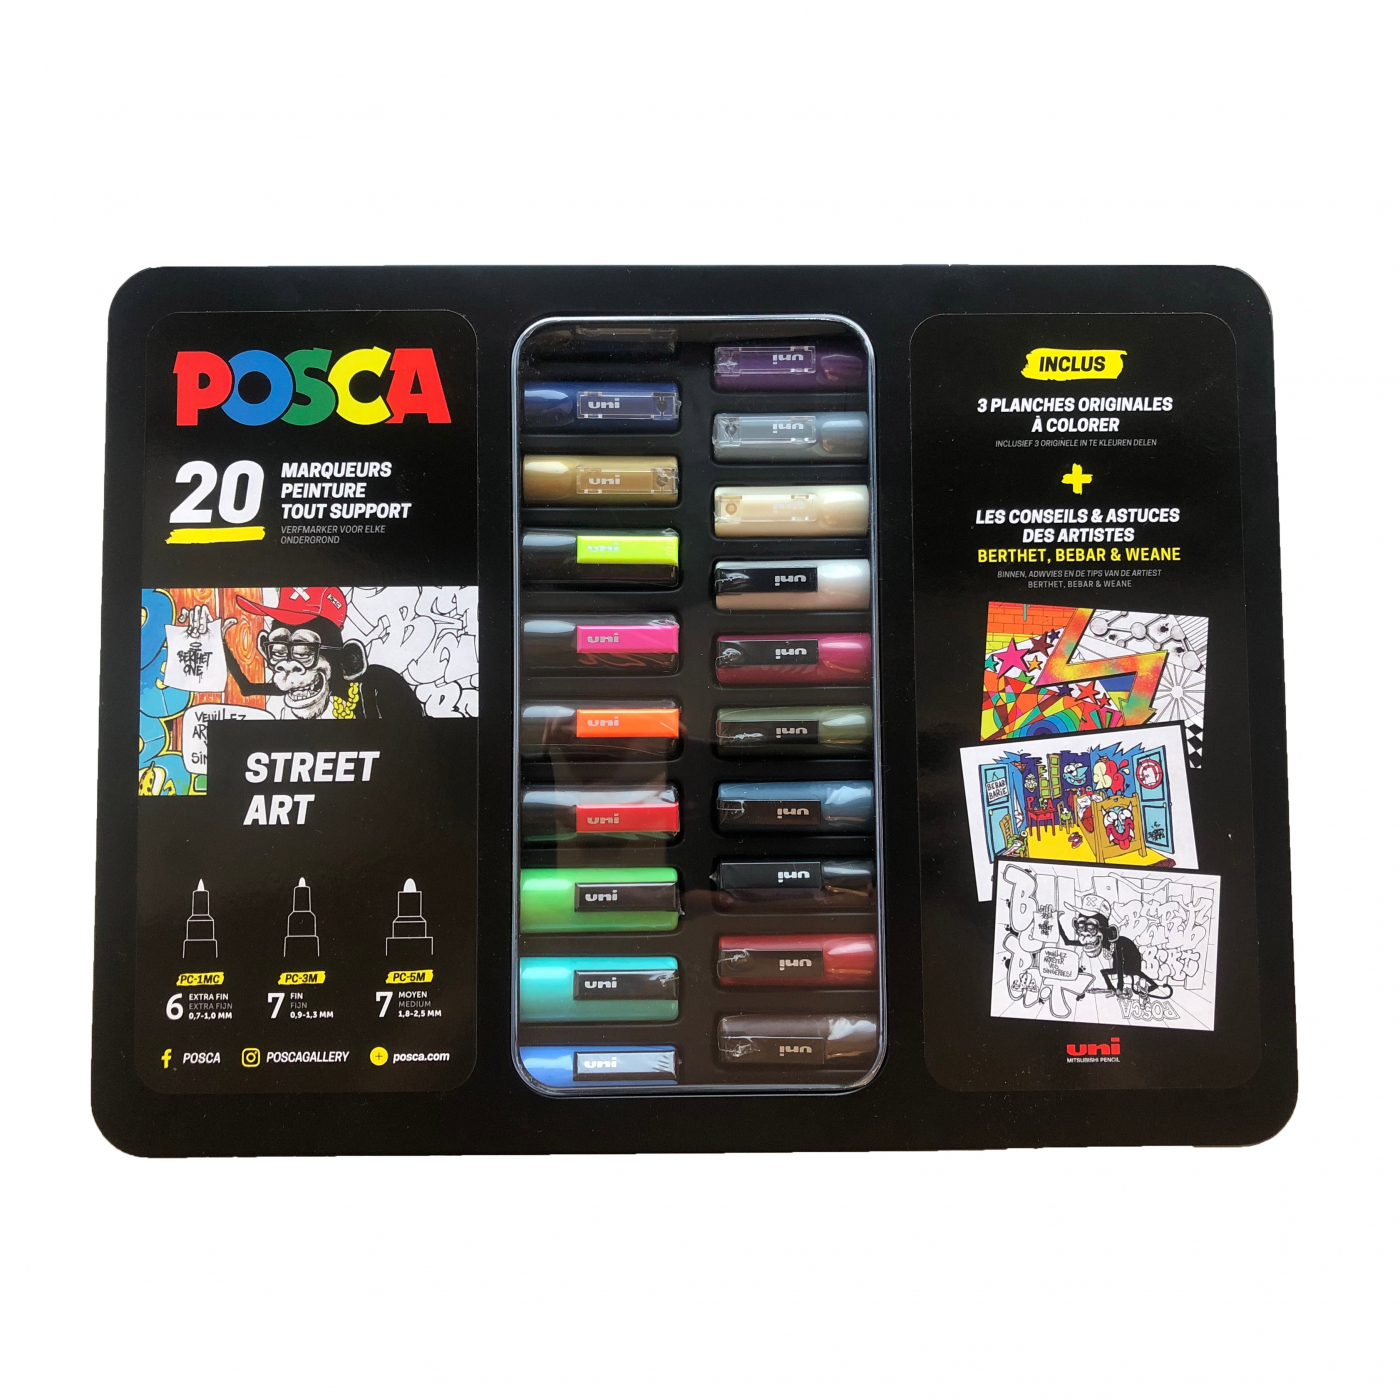 Posca Marker Street Art 20-set in the group Pens / Artist Pens / Illustration Markers at Pen Store (112449)